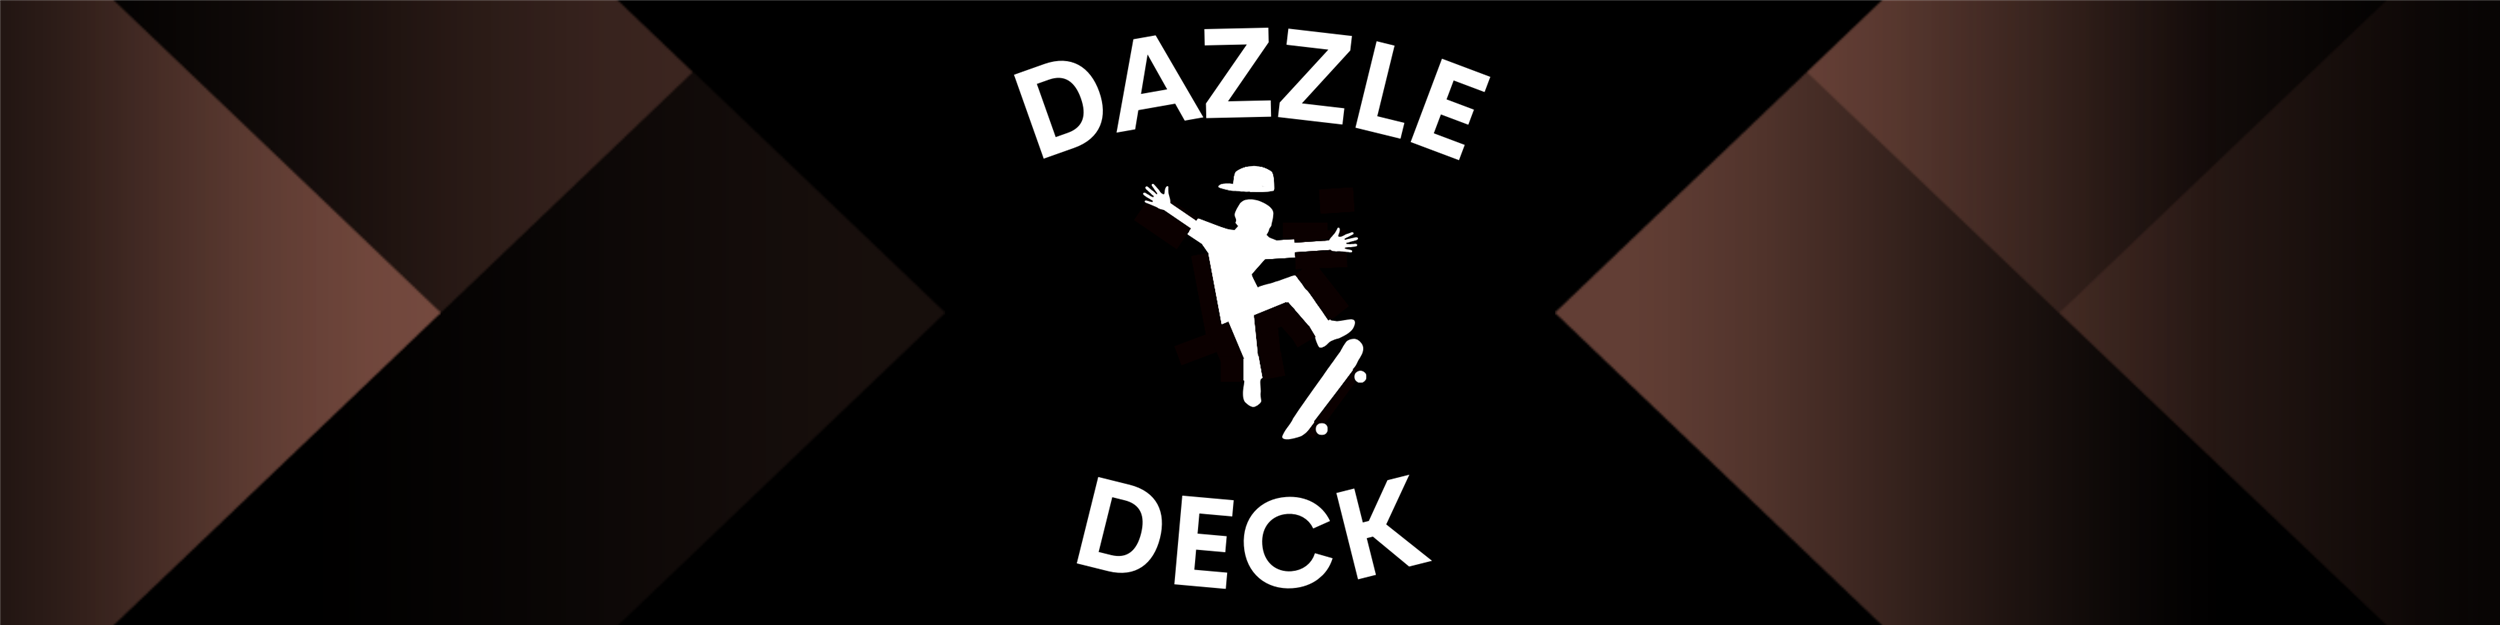 Dazzle Deck Skateboards